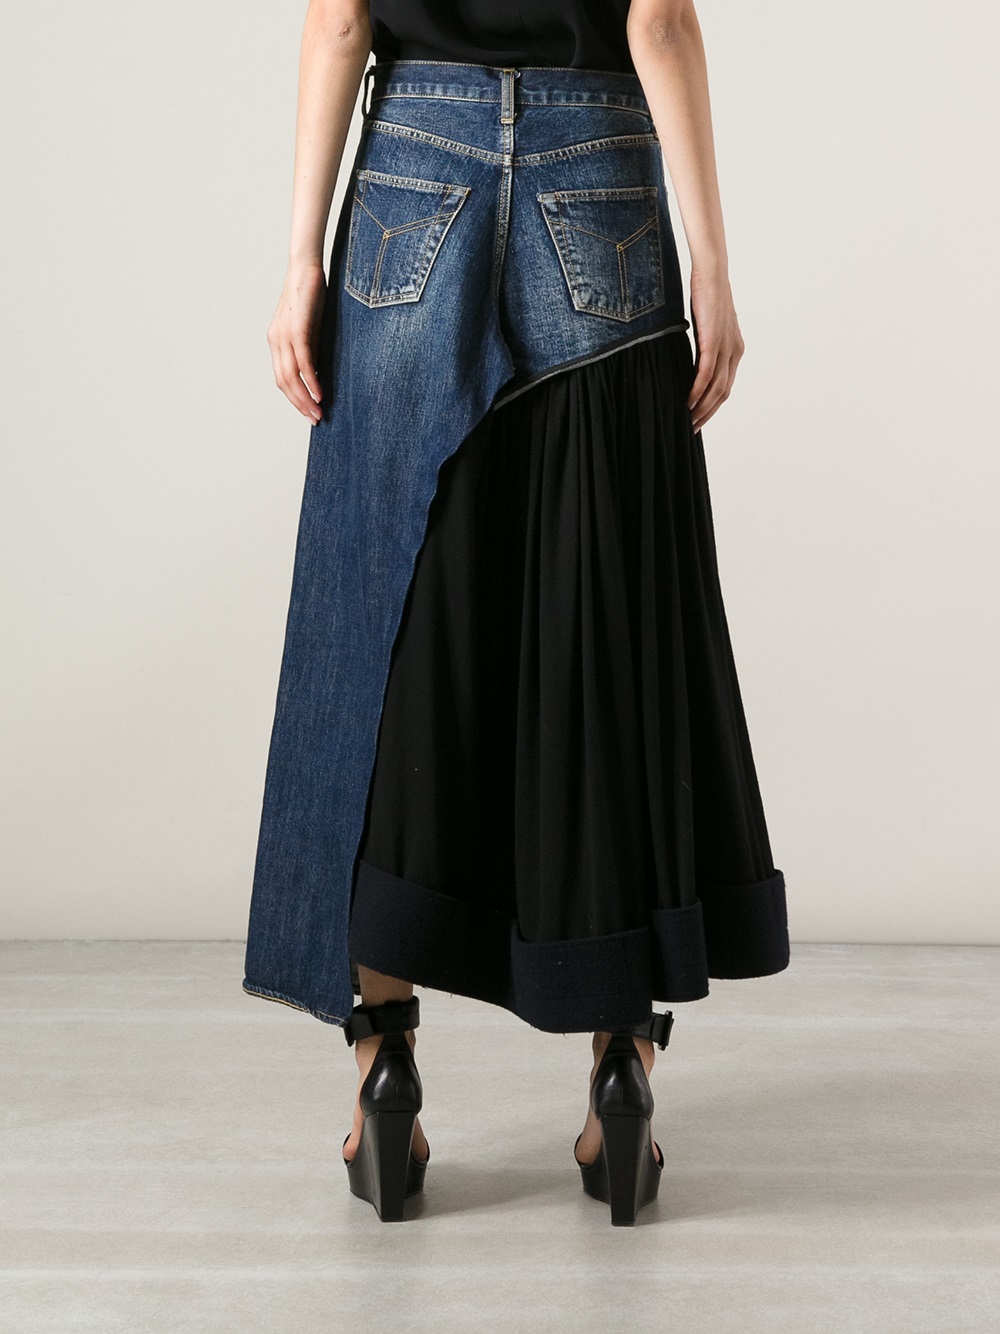 Lyst - Yohji Yamamoto Denim Skirt Trouser in Blue